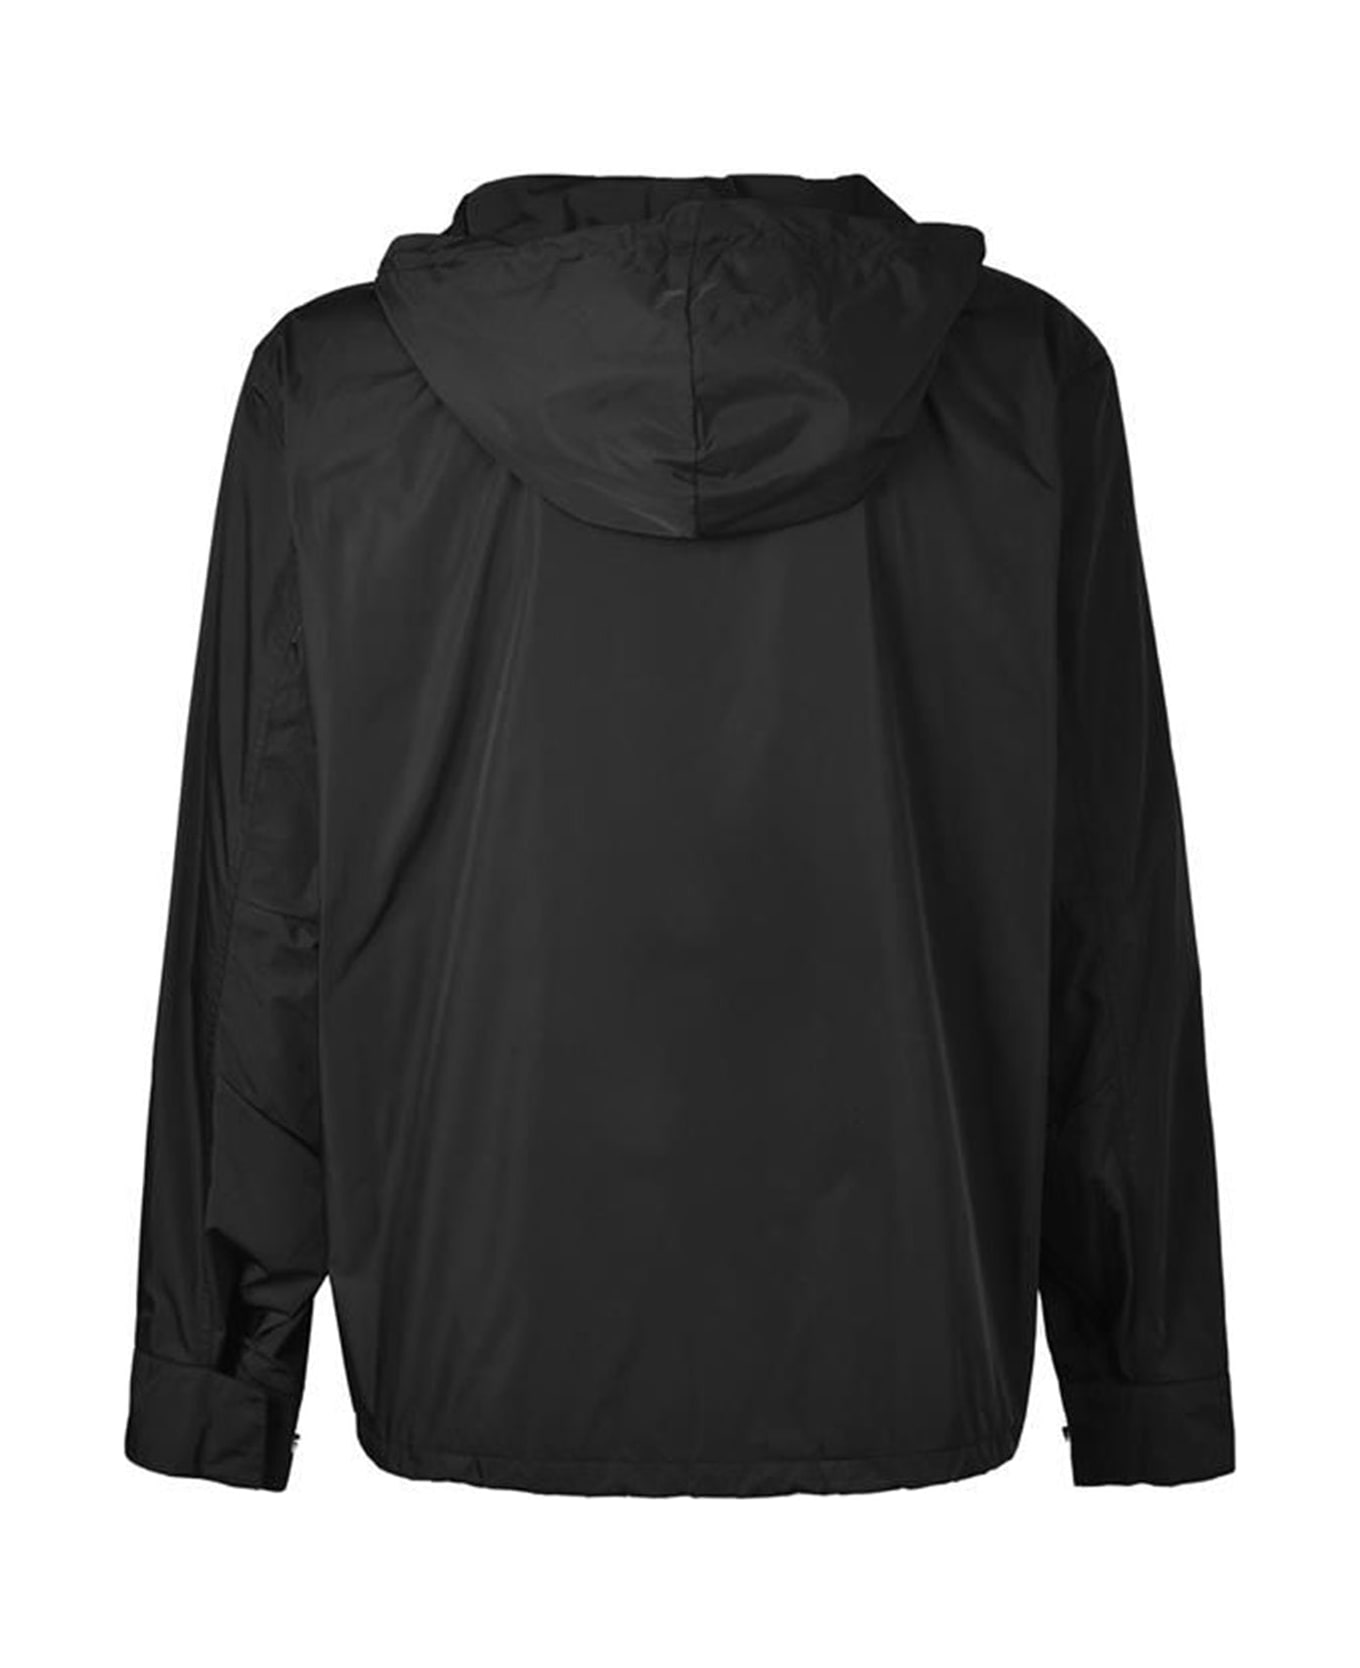 Givenchy Hooded Windbreaker Jacket - Black